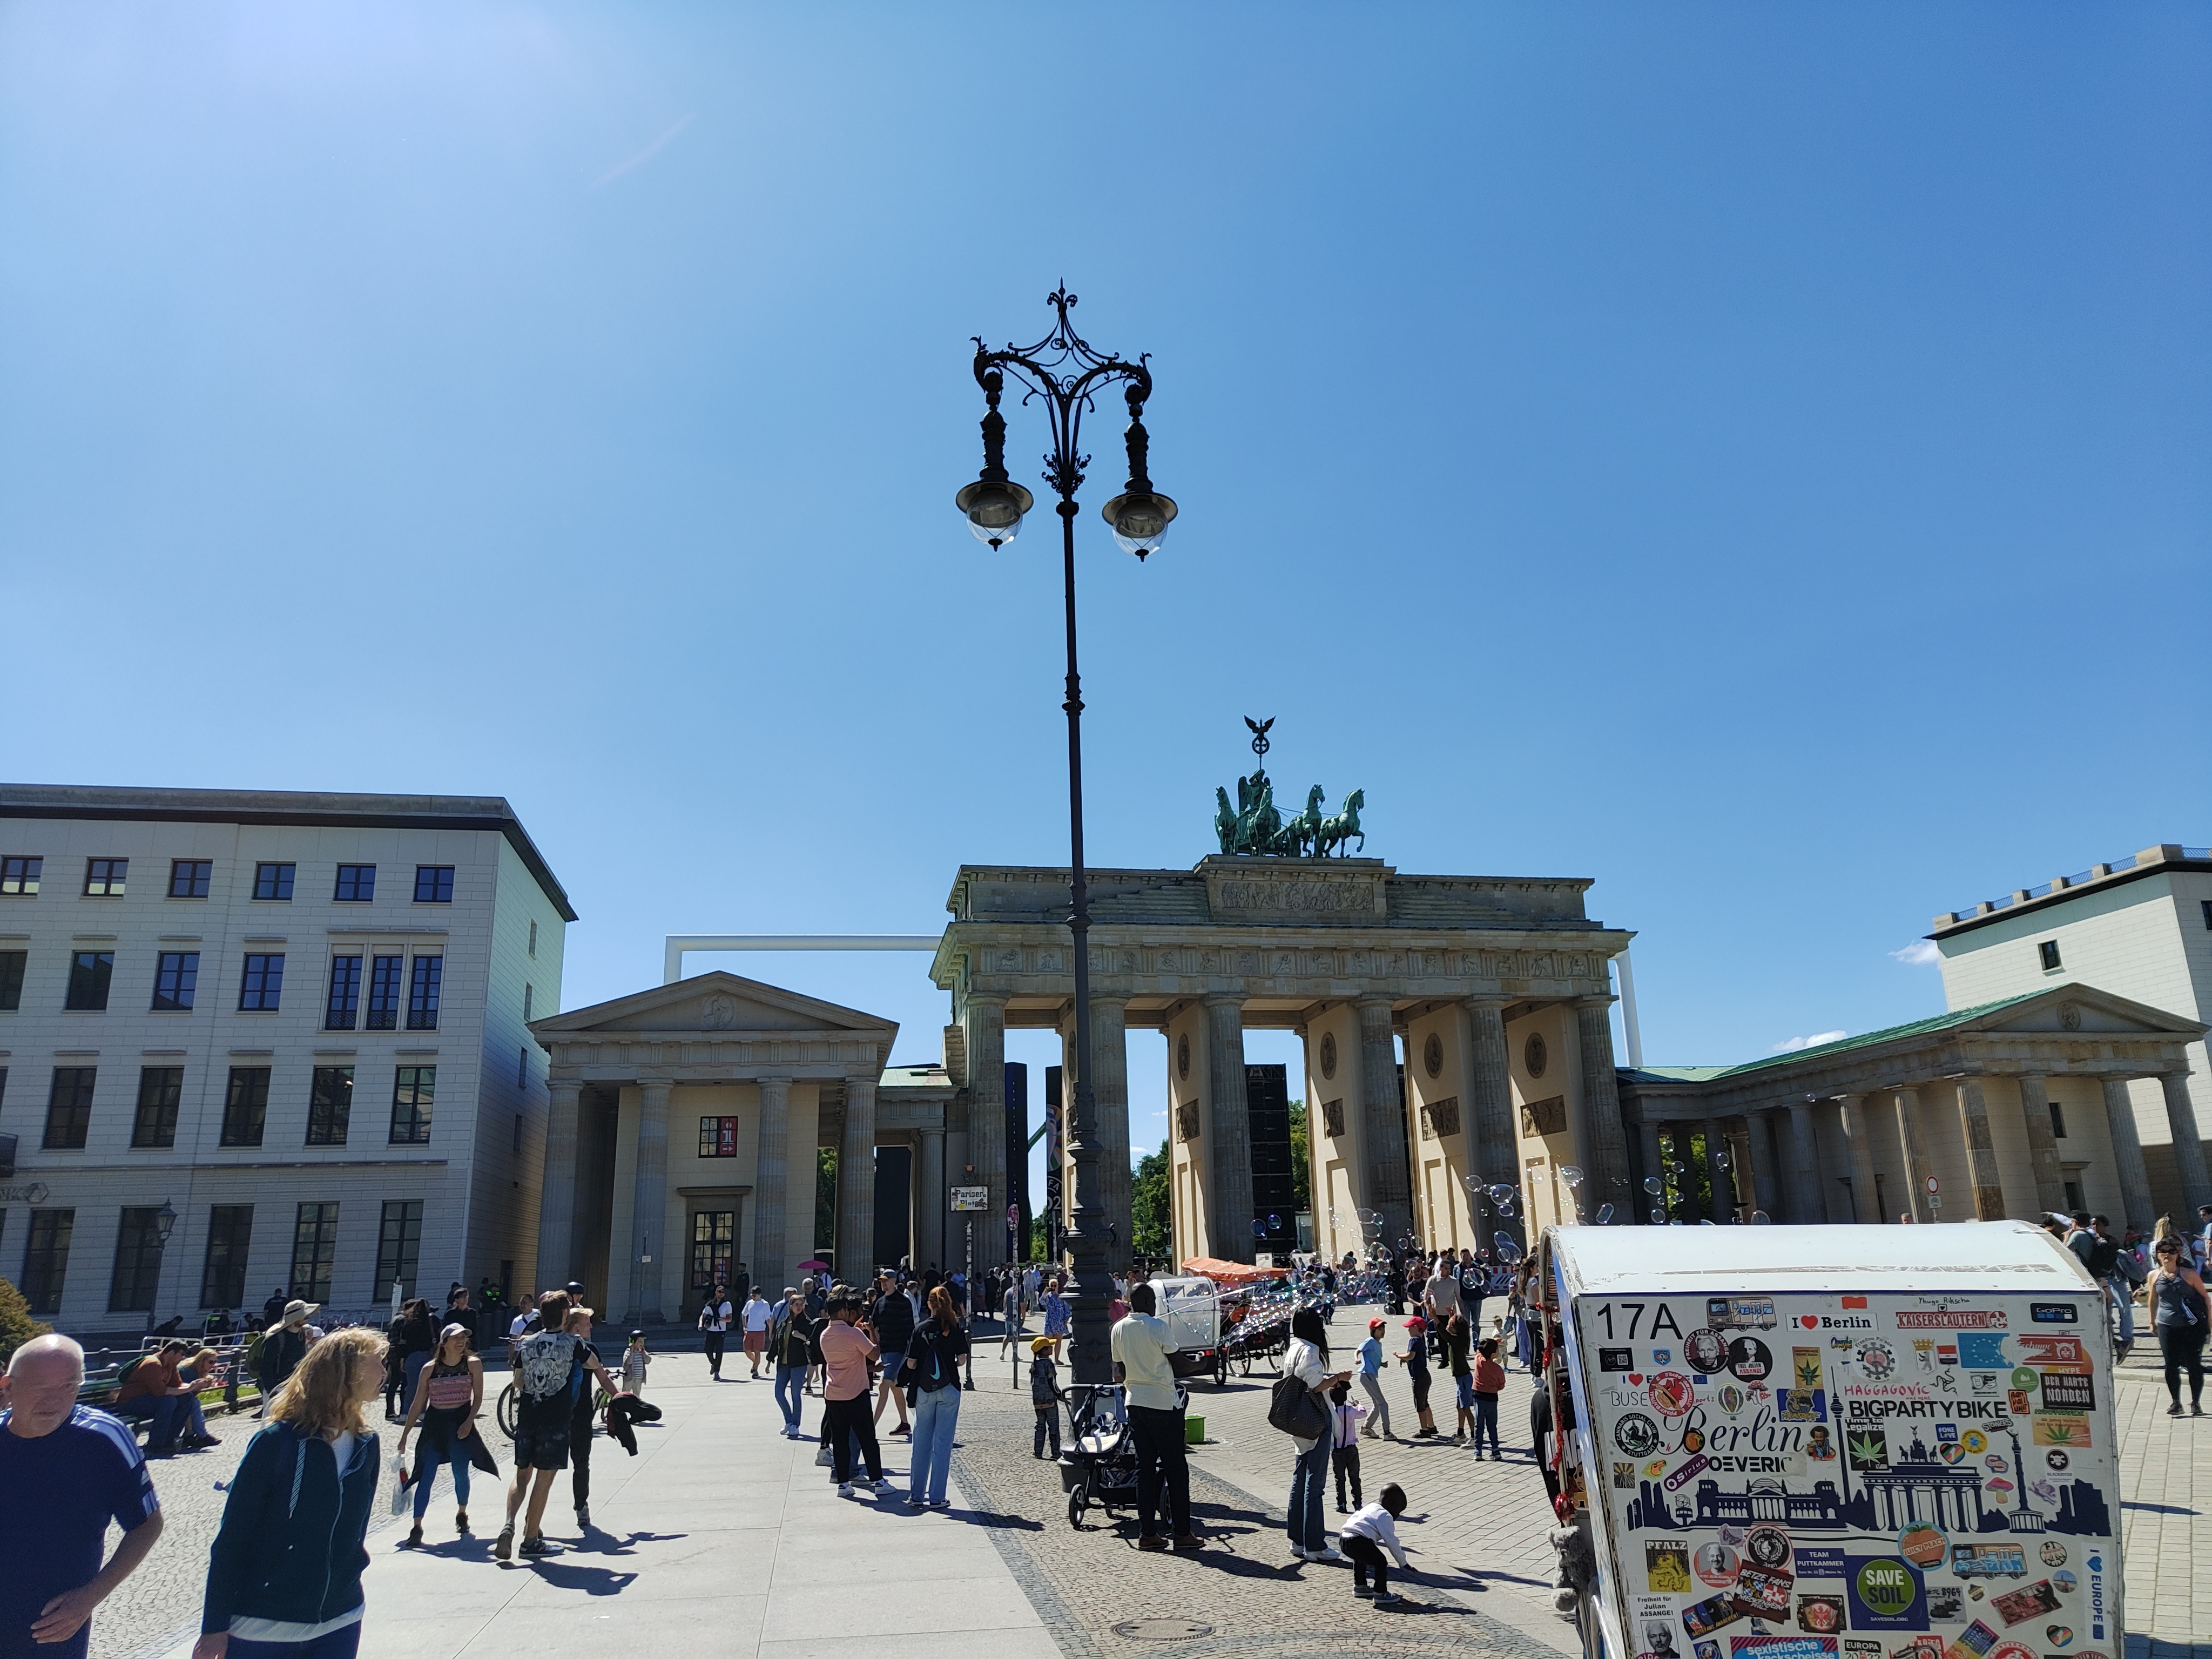 Bradenburg Gate in Summer full of tourists, Berlin, Germany.